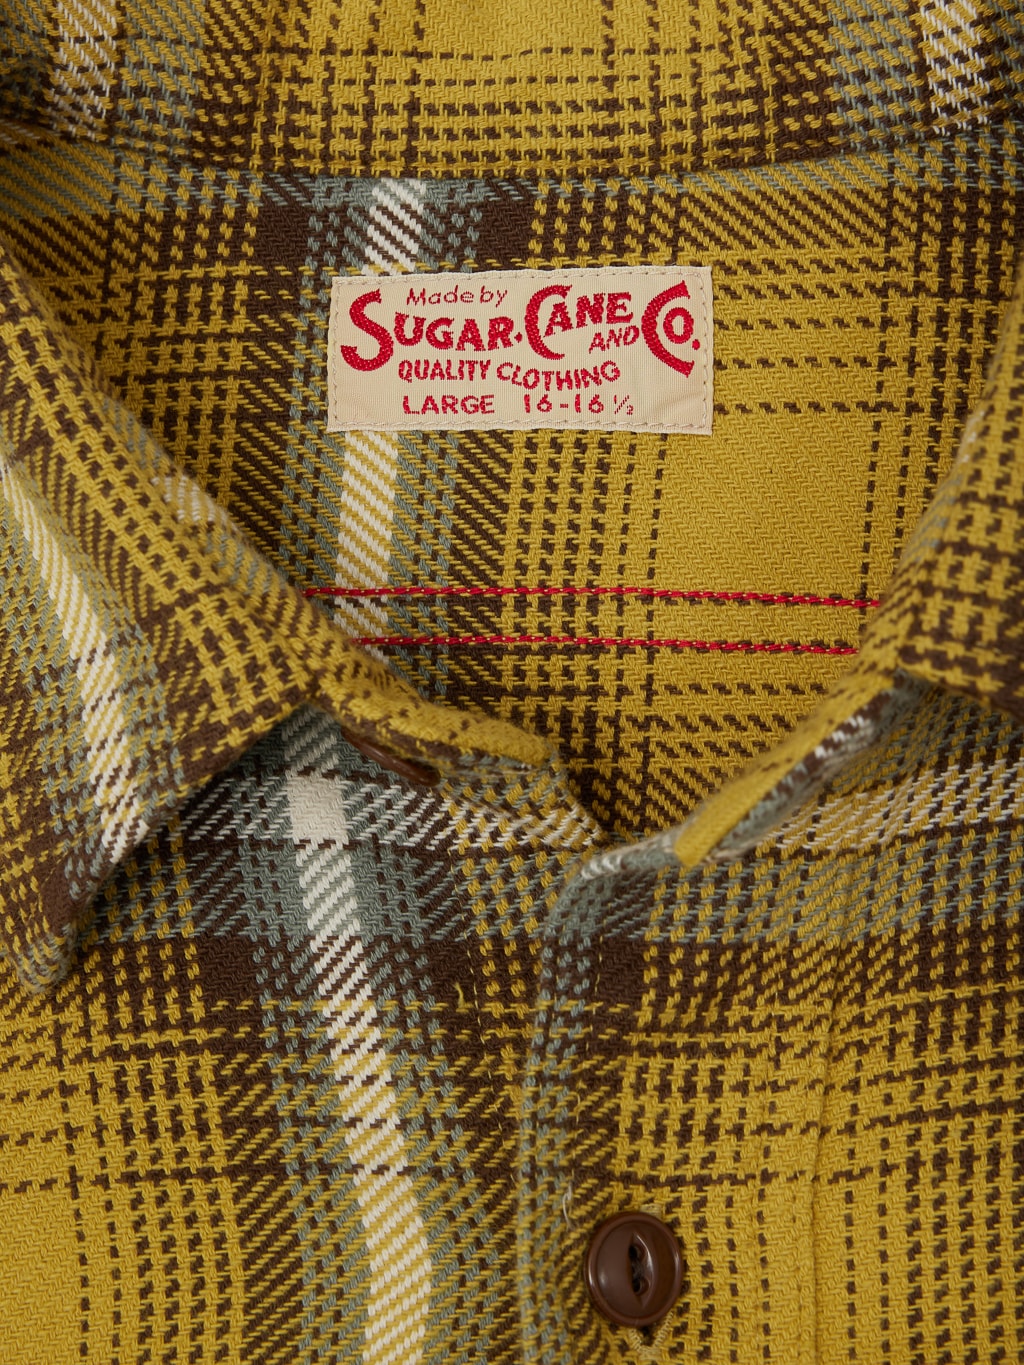 sugar cane twill check work shirt flannel yellow label